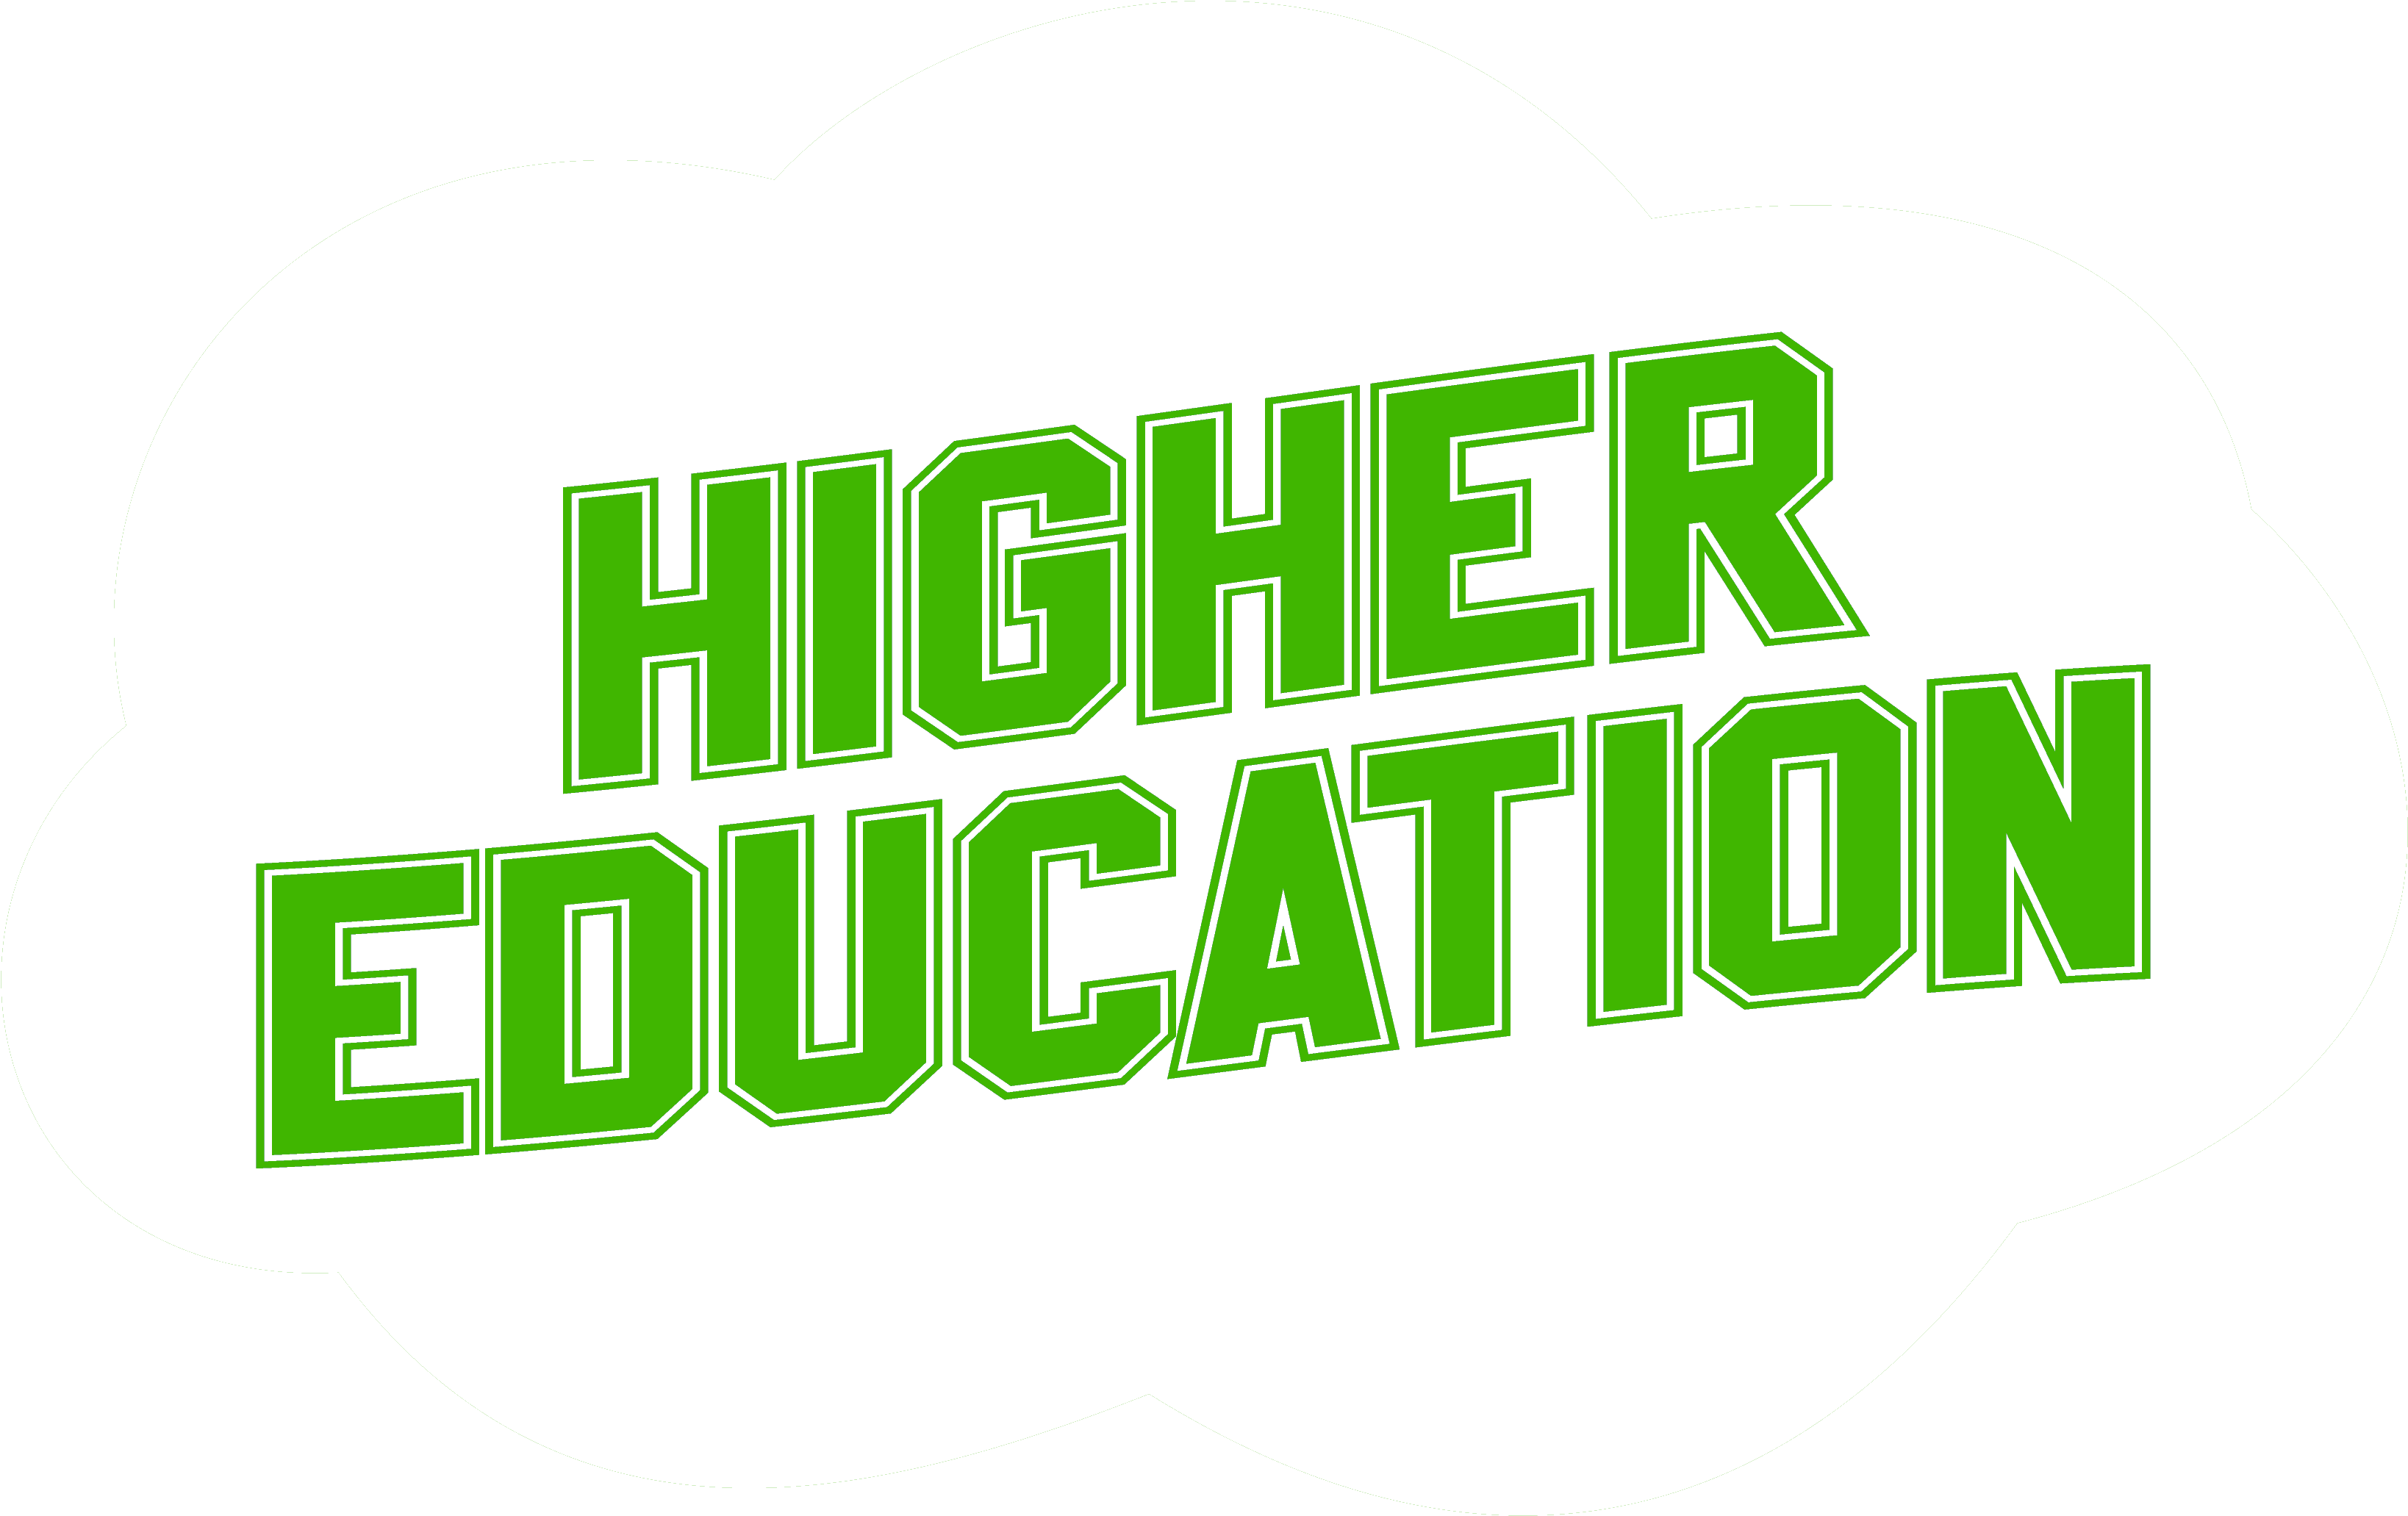 Higher Education Smoke Shop - Higher Education Charlottesville (3635x2400)